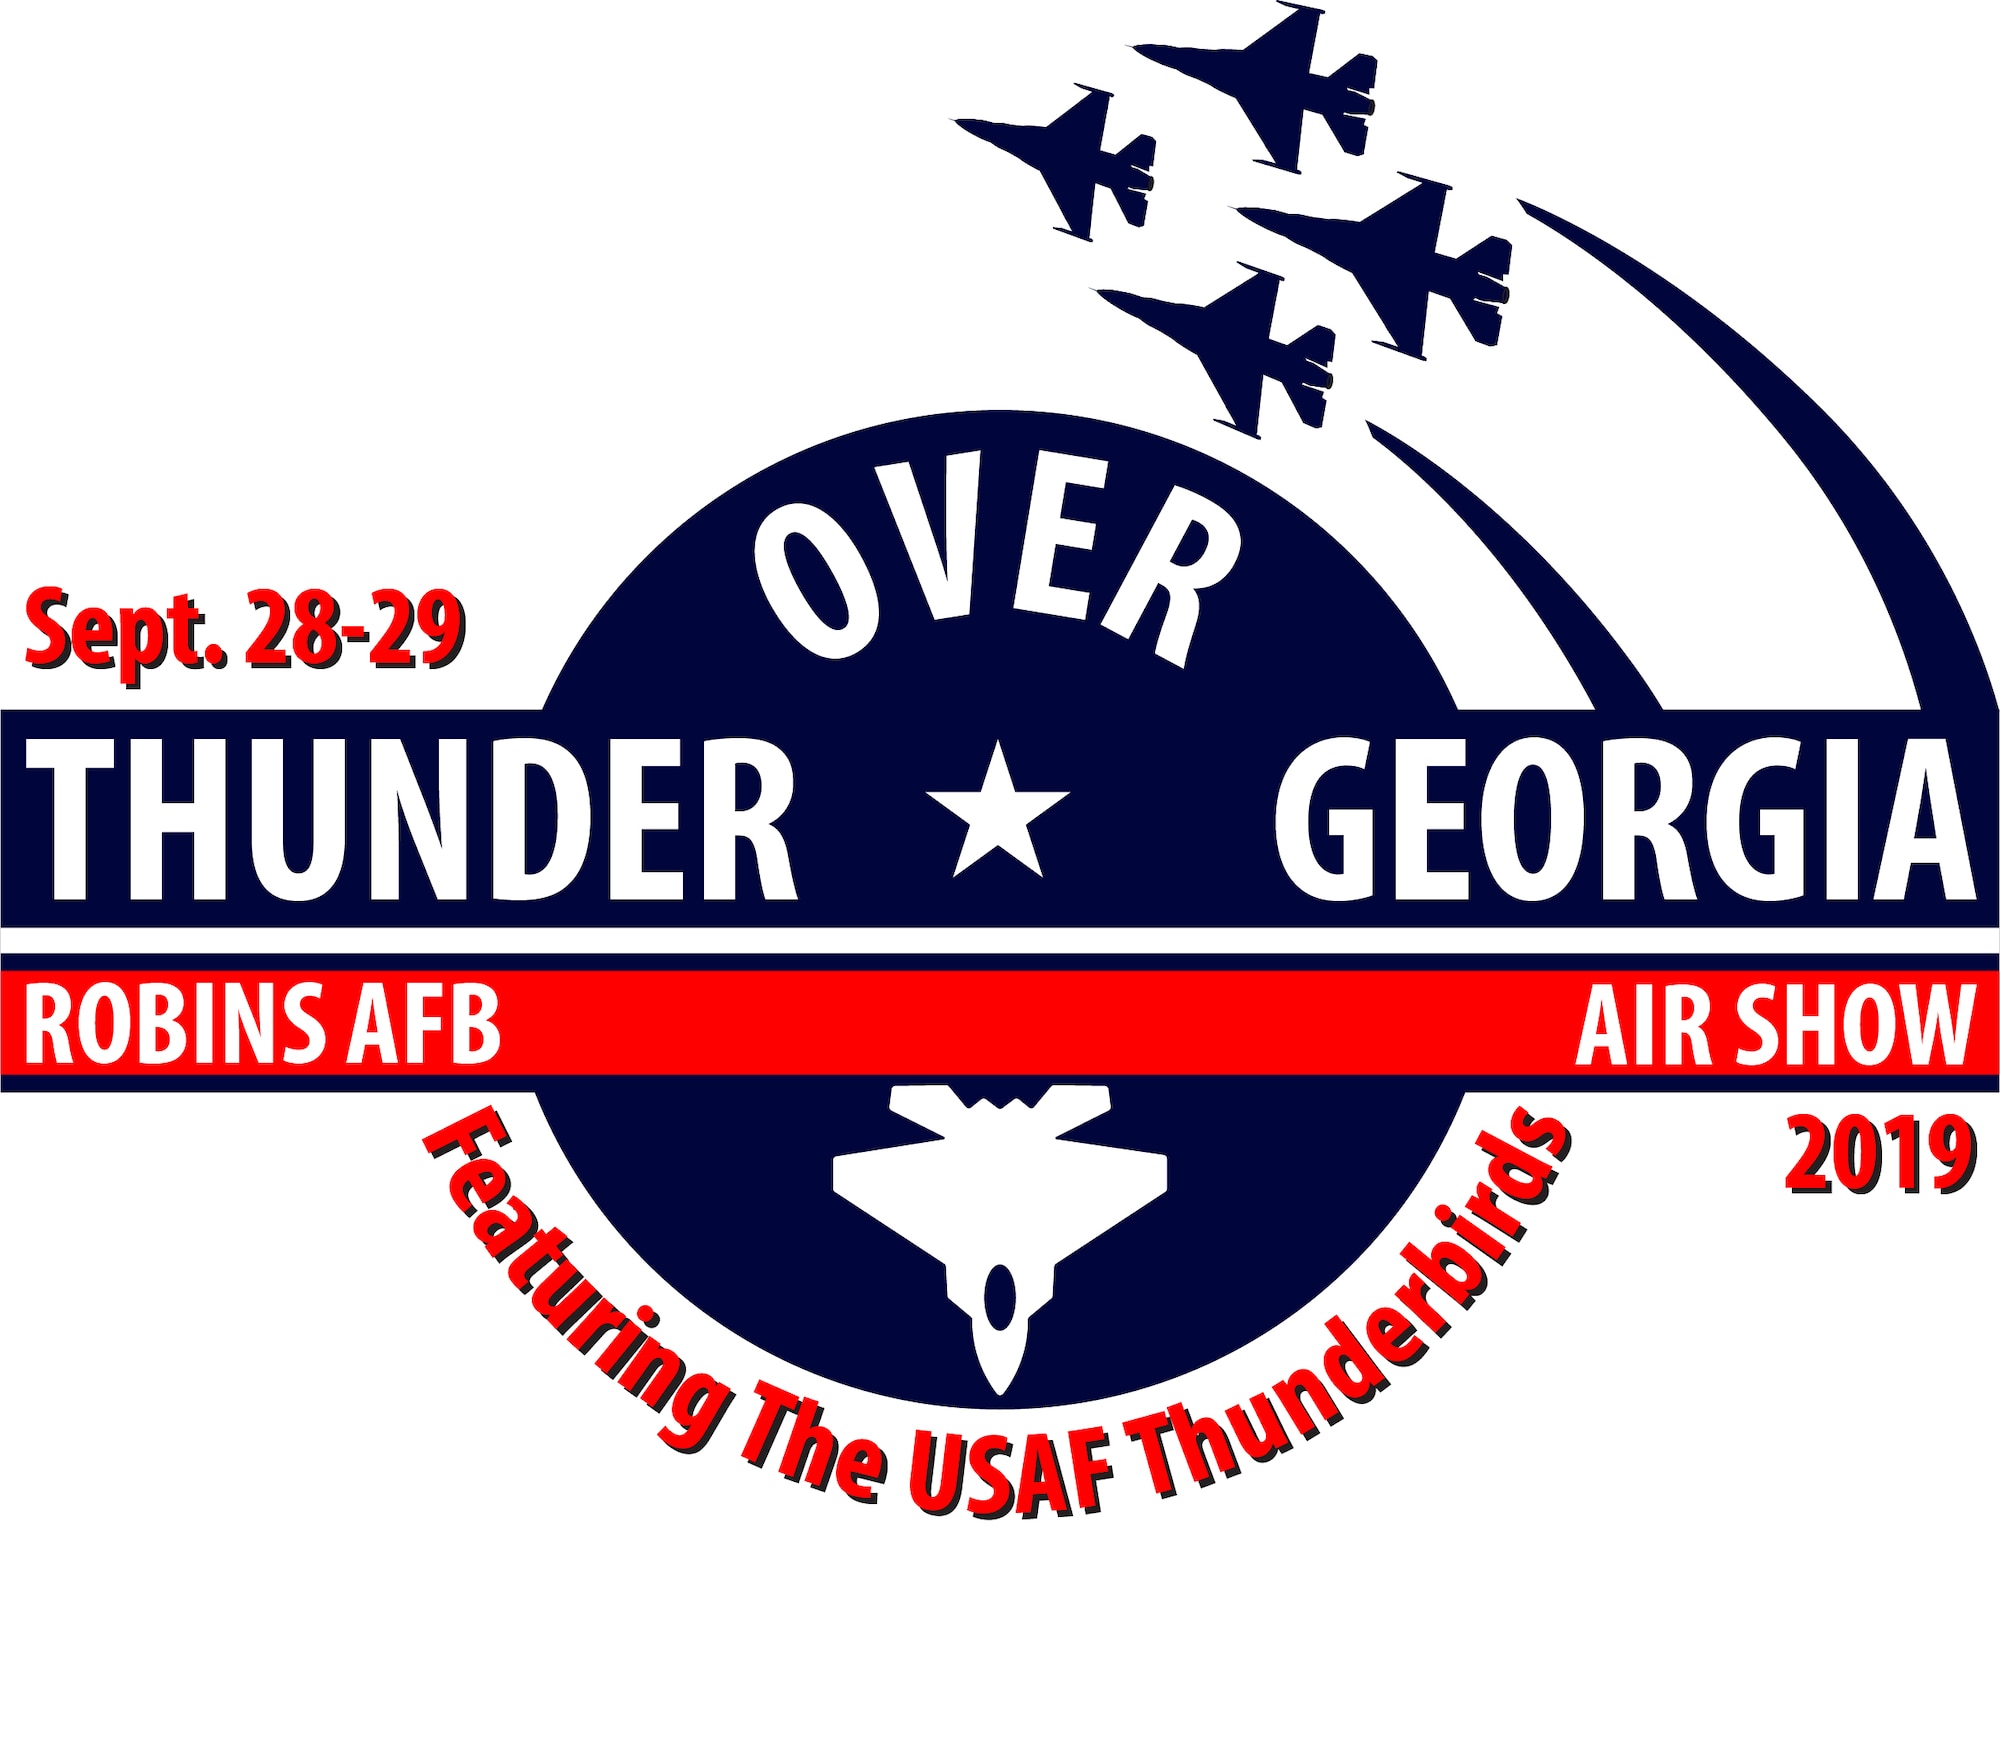 Thunderbirds return to headline Team Robins 2019 air show